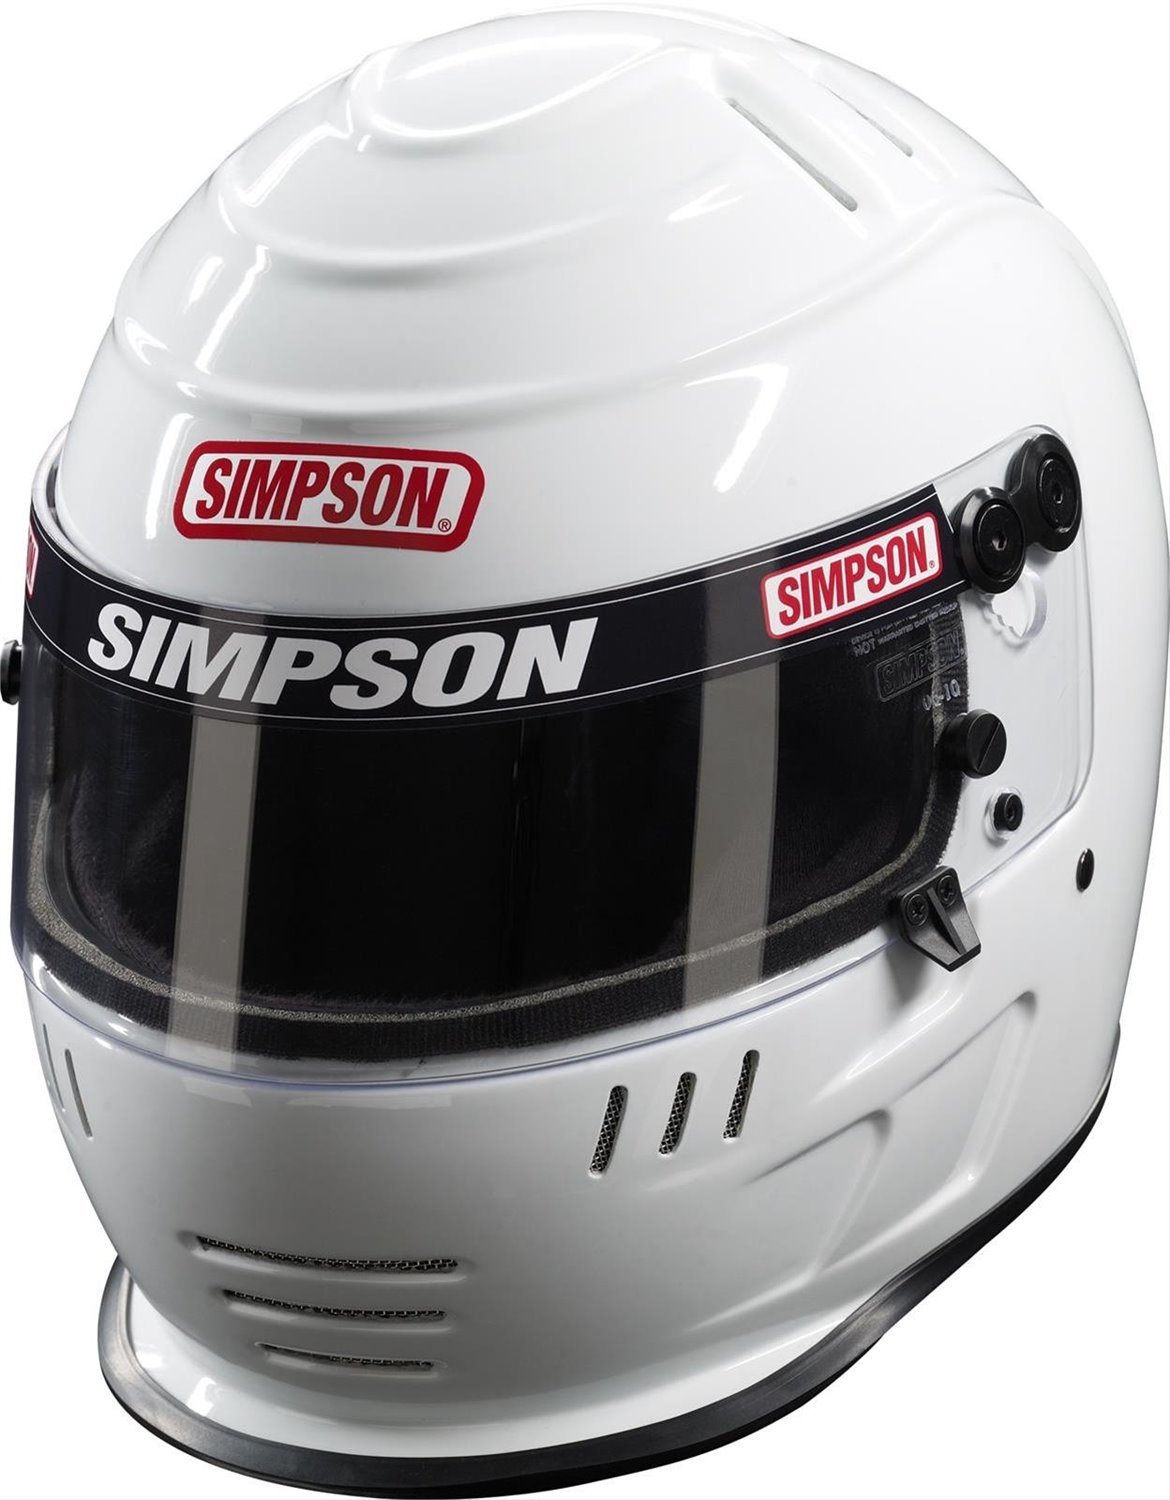 Simpson Speedway Shark Racing Helmets SA2020